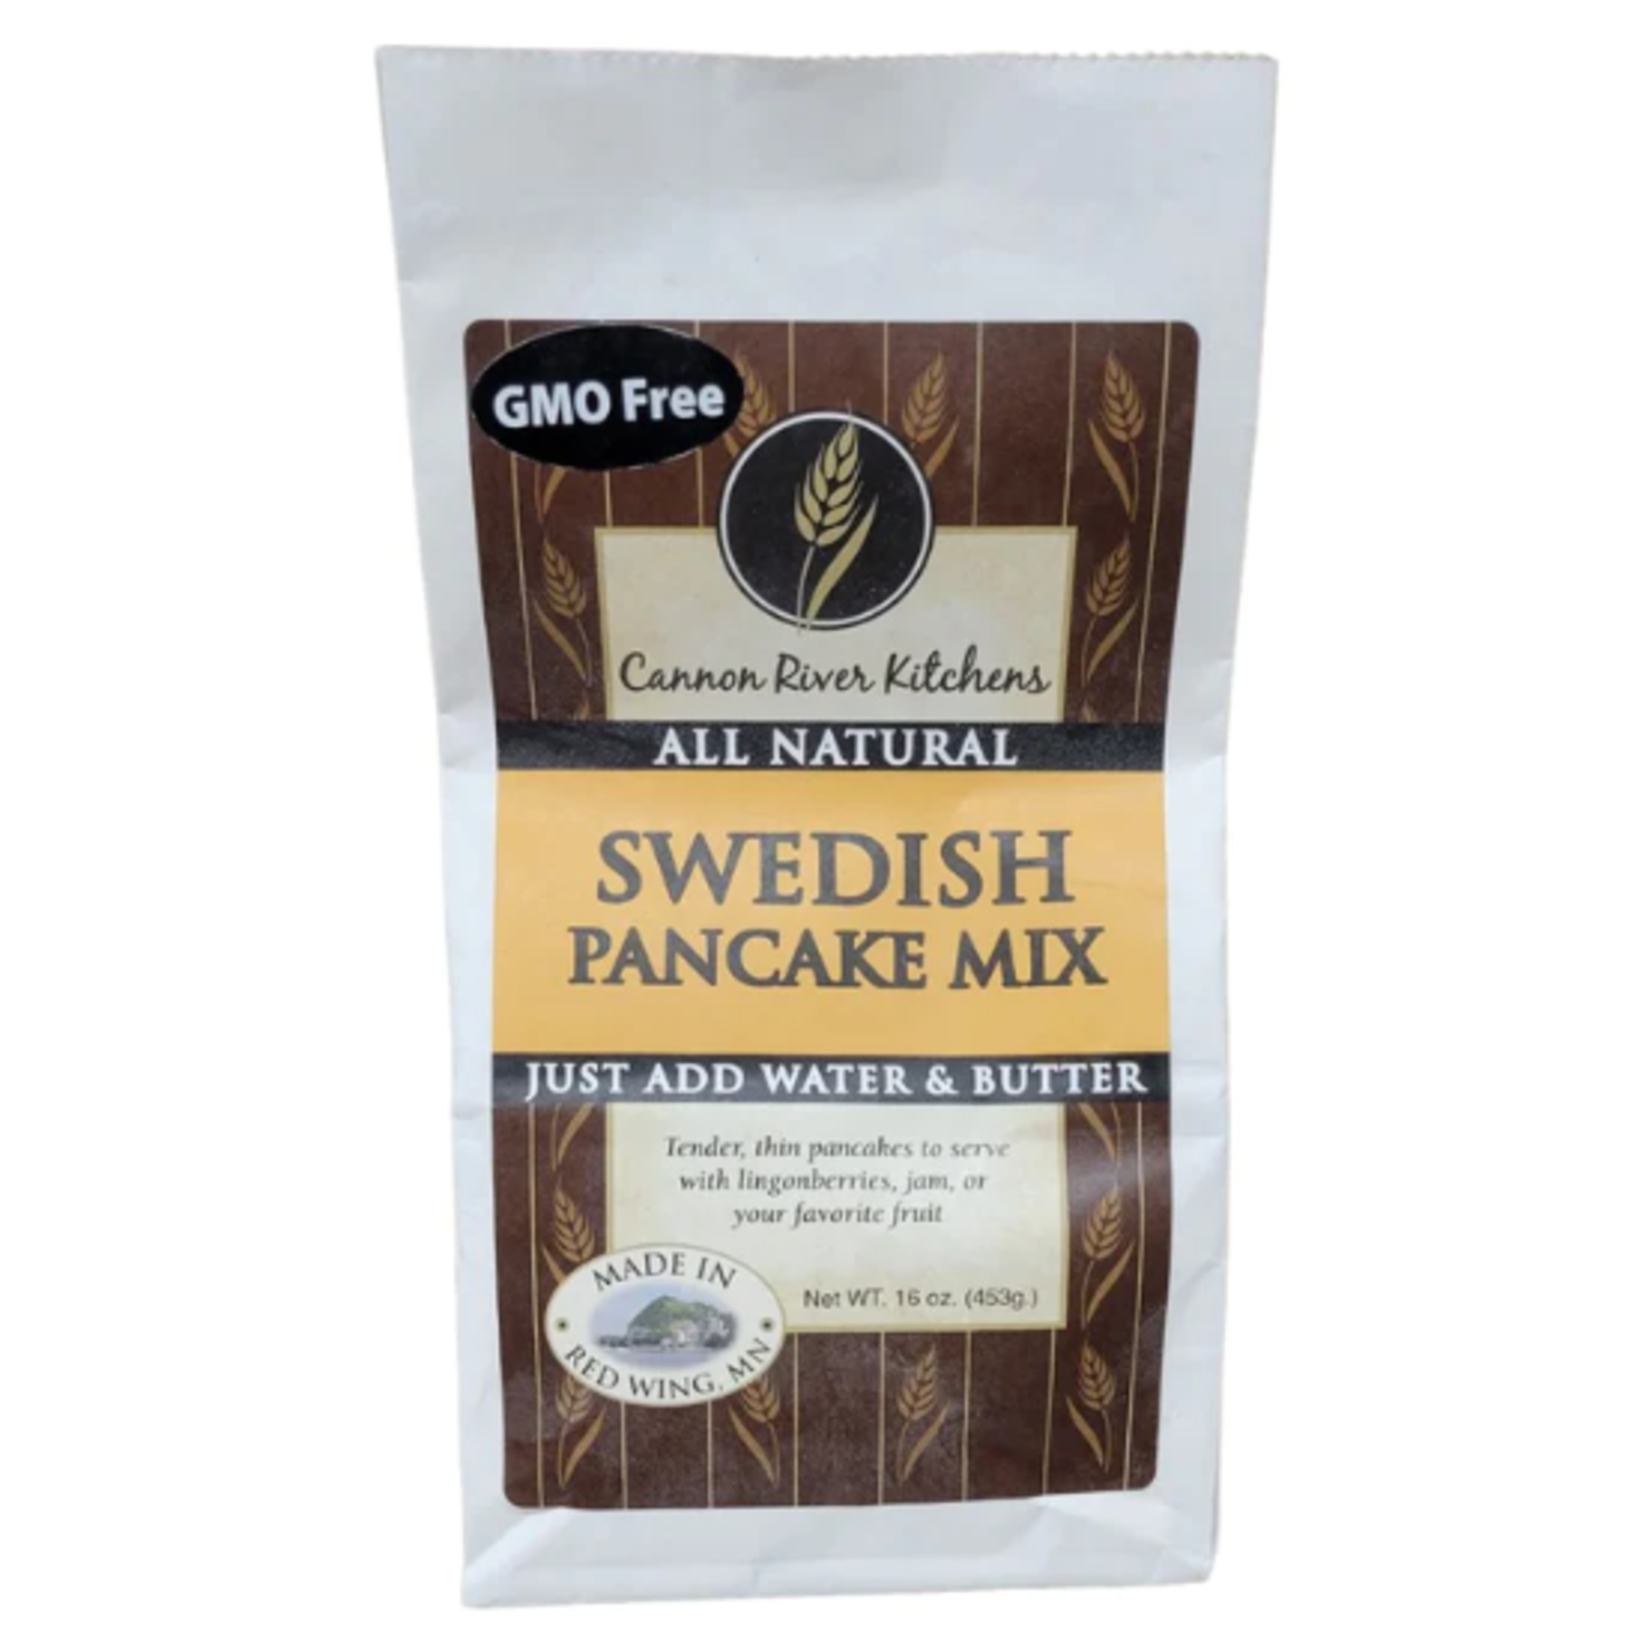 Cannon River Kitchens Swedish Pancake Mix